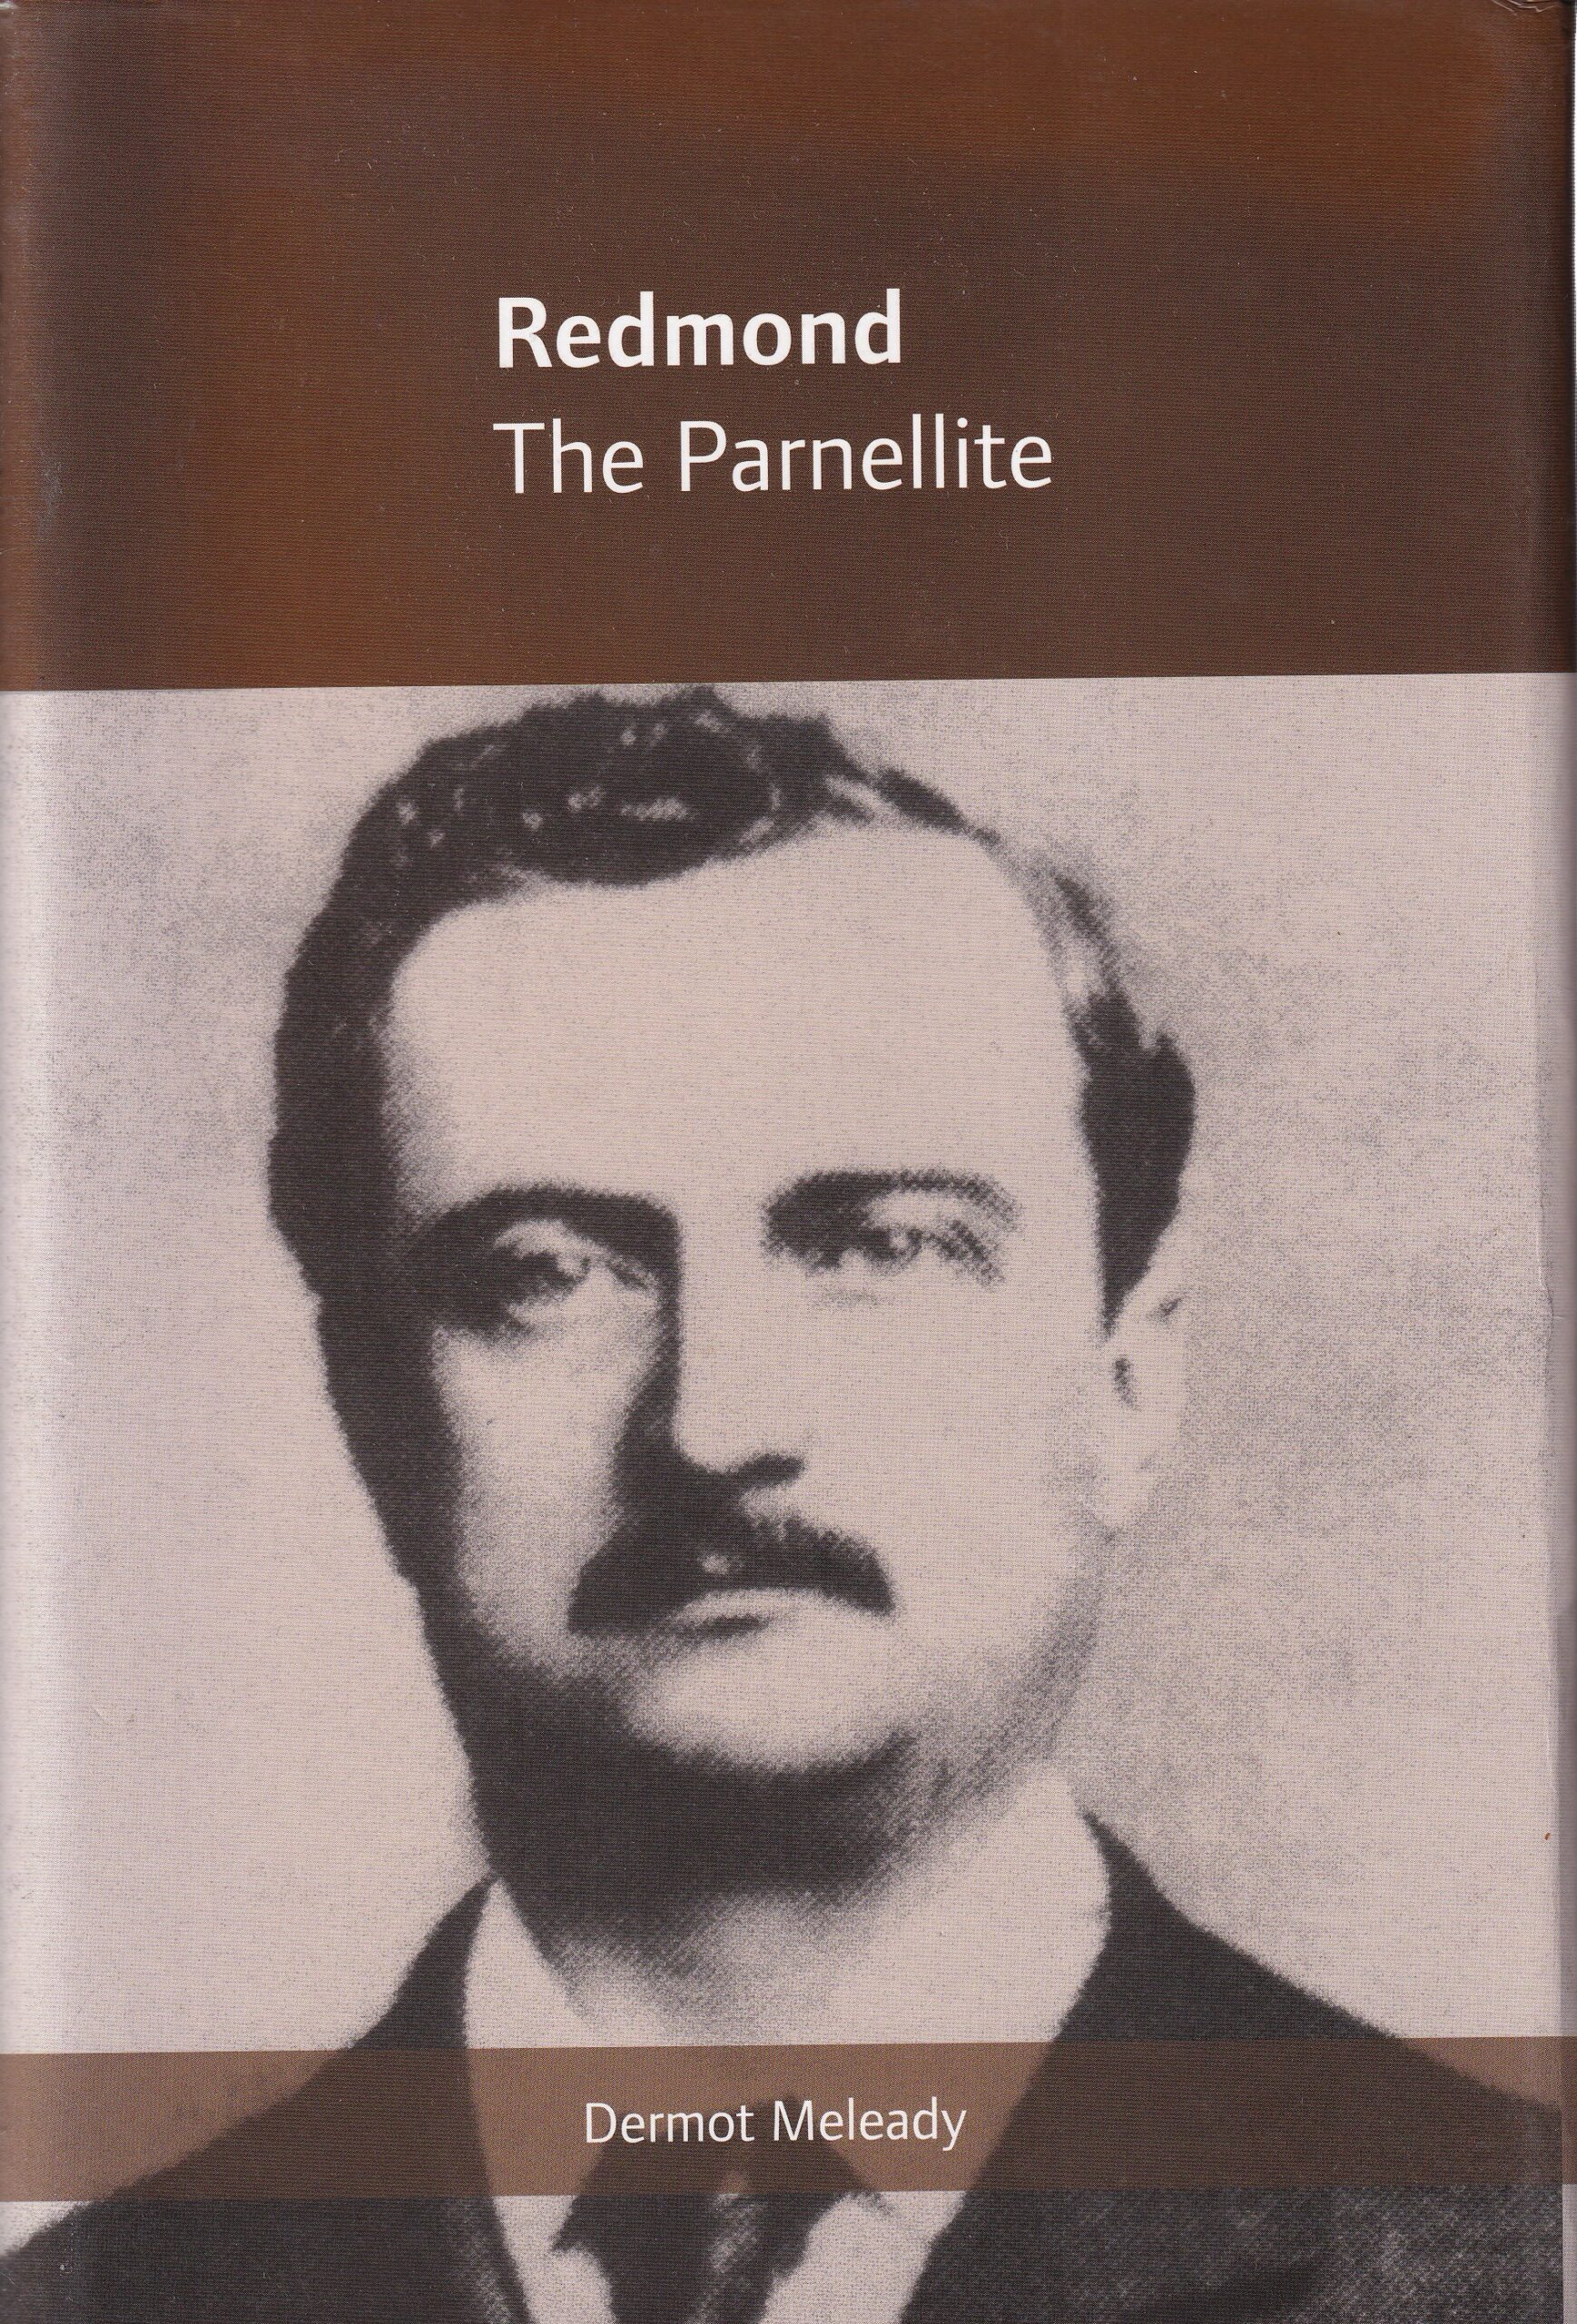 Redmond: The Parnellite by Dermot Meleady